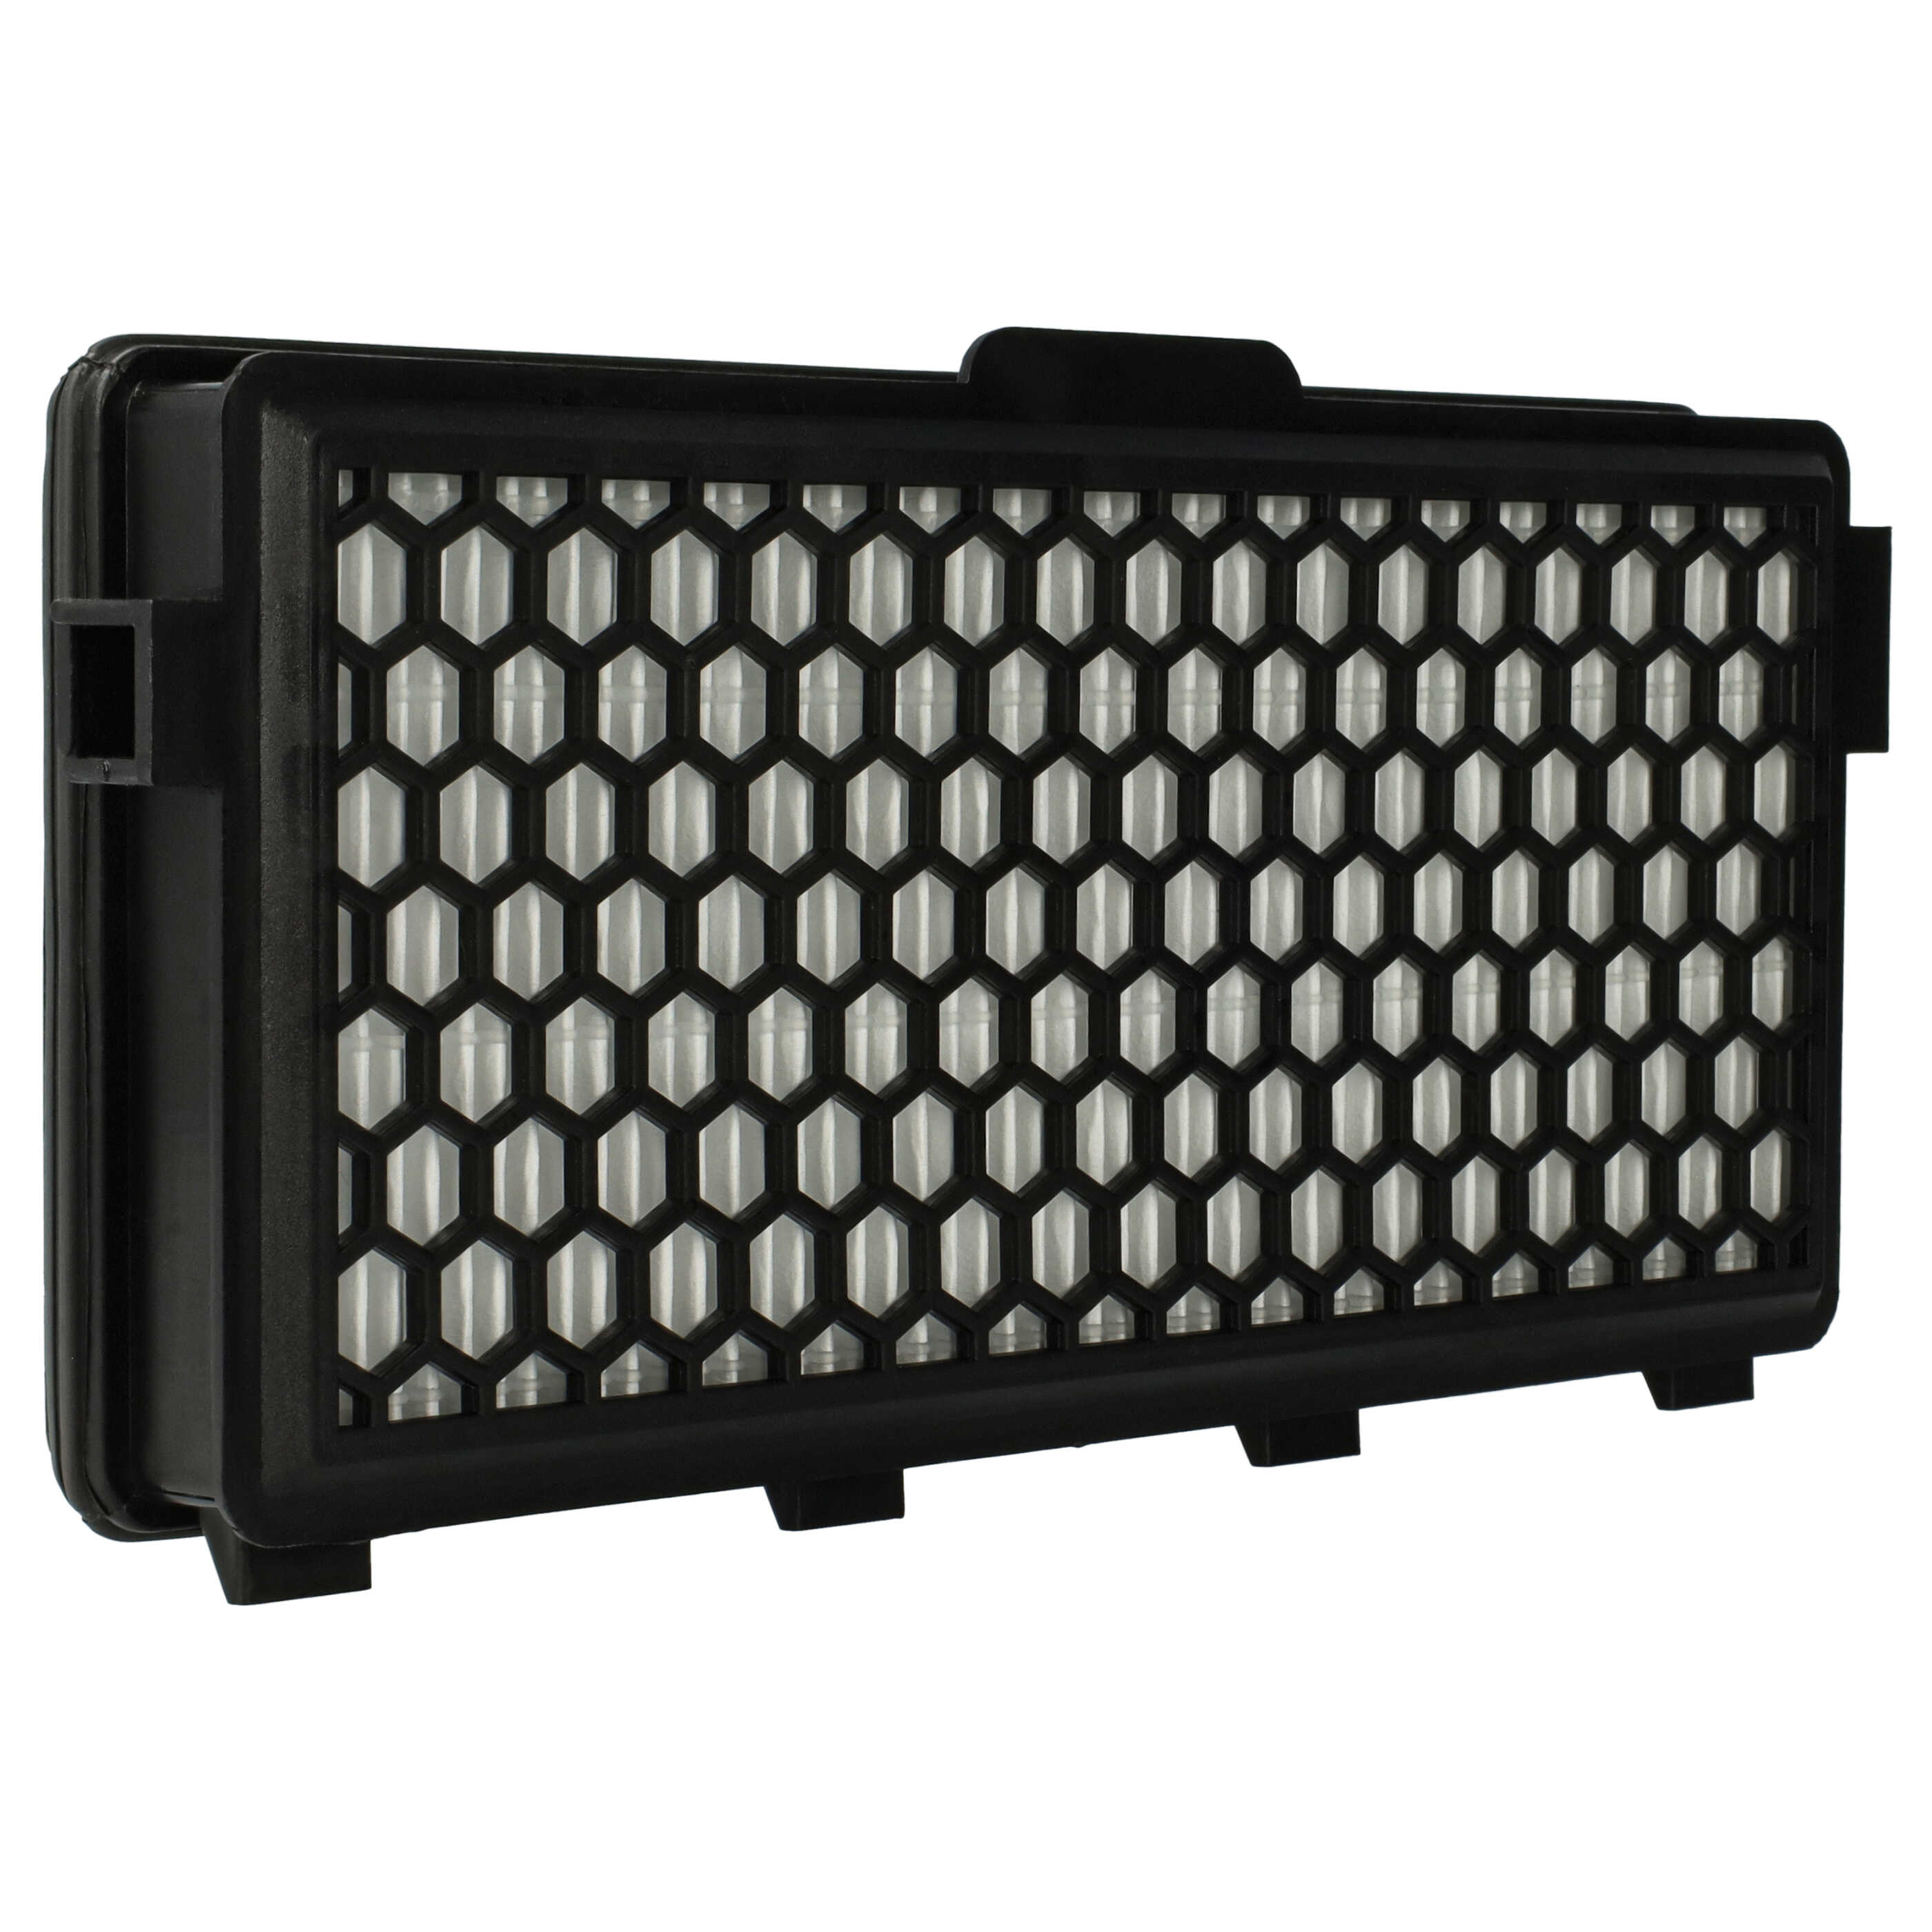 2x Filtro reemplaza Miele 5996880, 5996882, 5996881 para aspiradora - filtro de escape HEPA negro / blanco